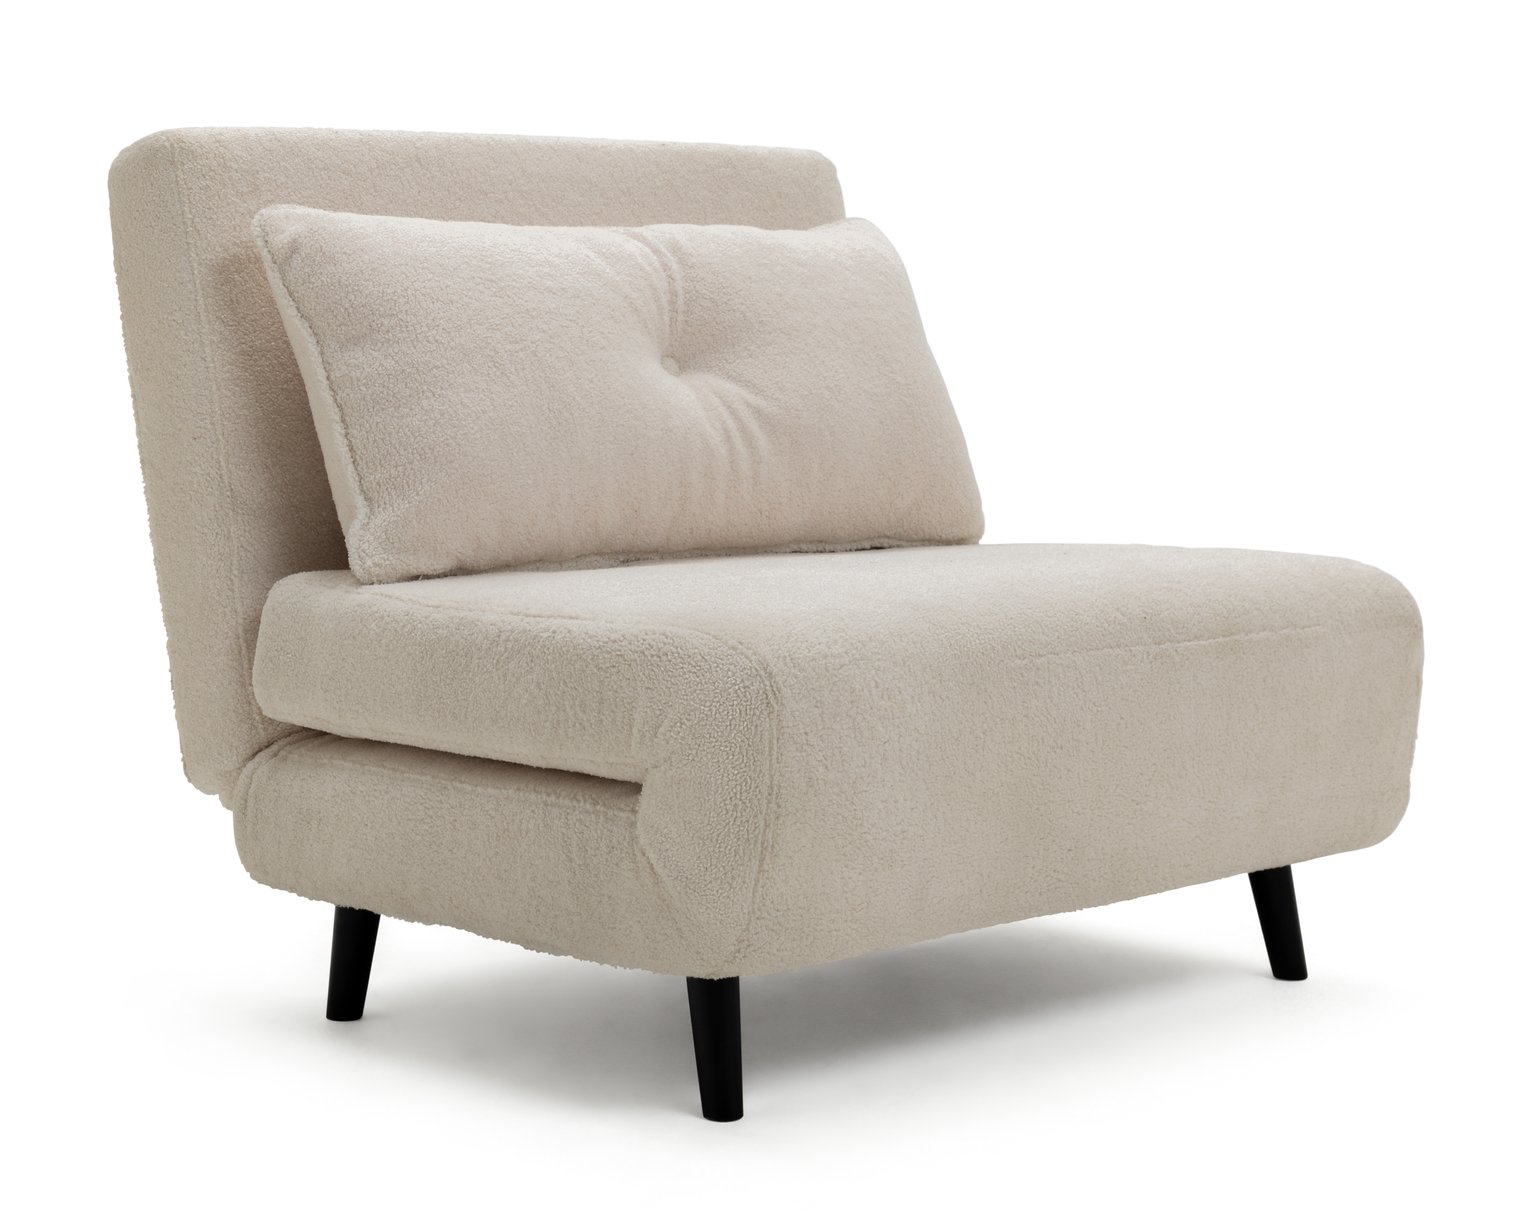 Habitat Roma Single Fabric Chairbed - Cream